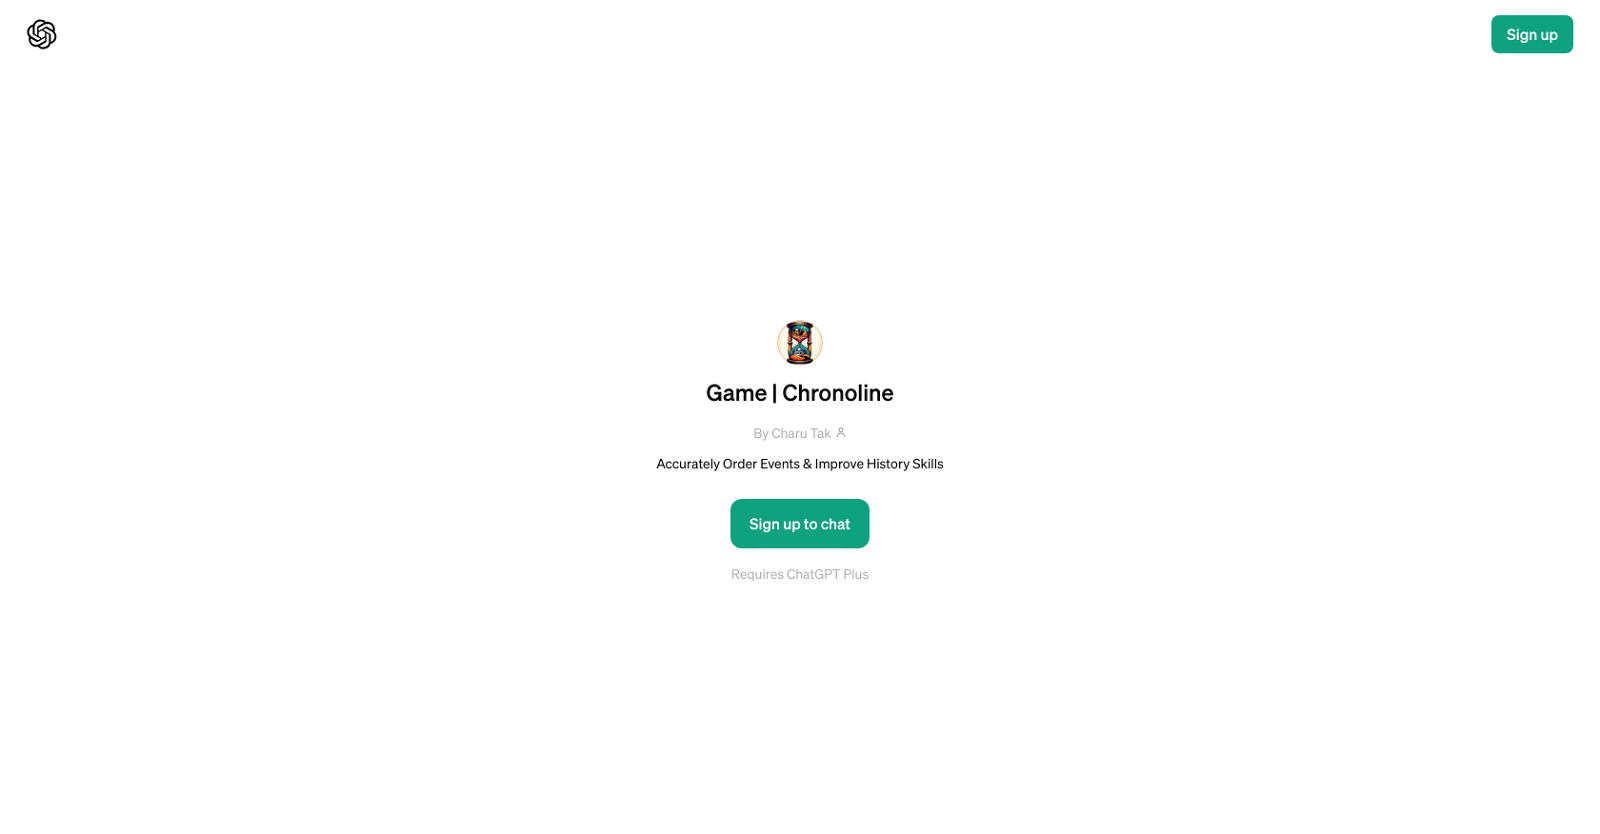 Game | Chronoline website